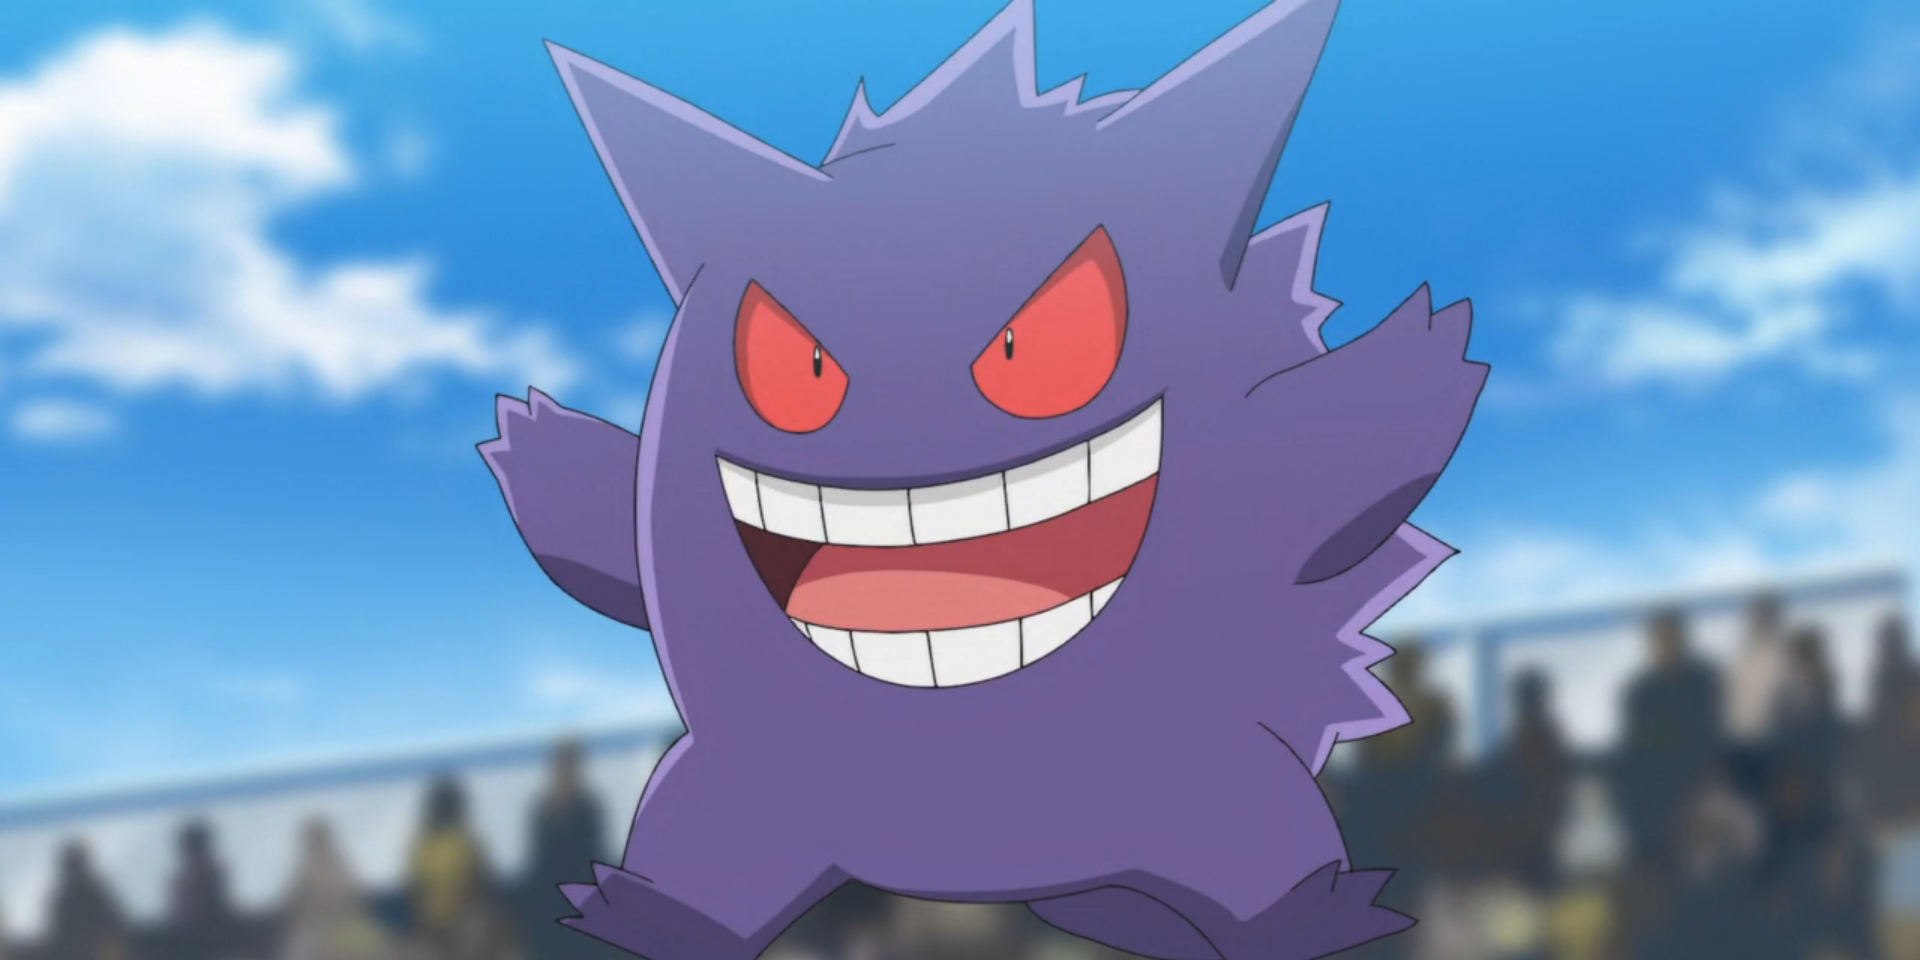 Gengar mid-jump in the Pokémon anime.